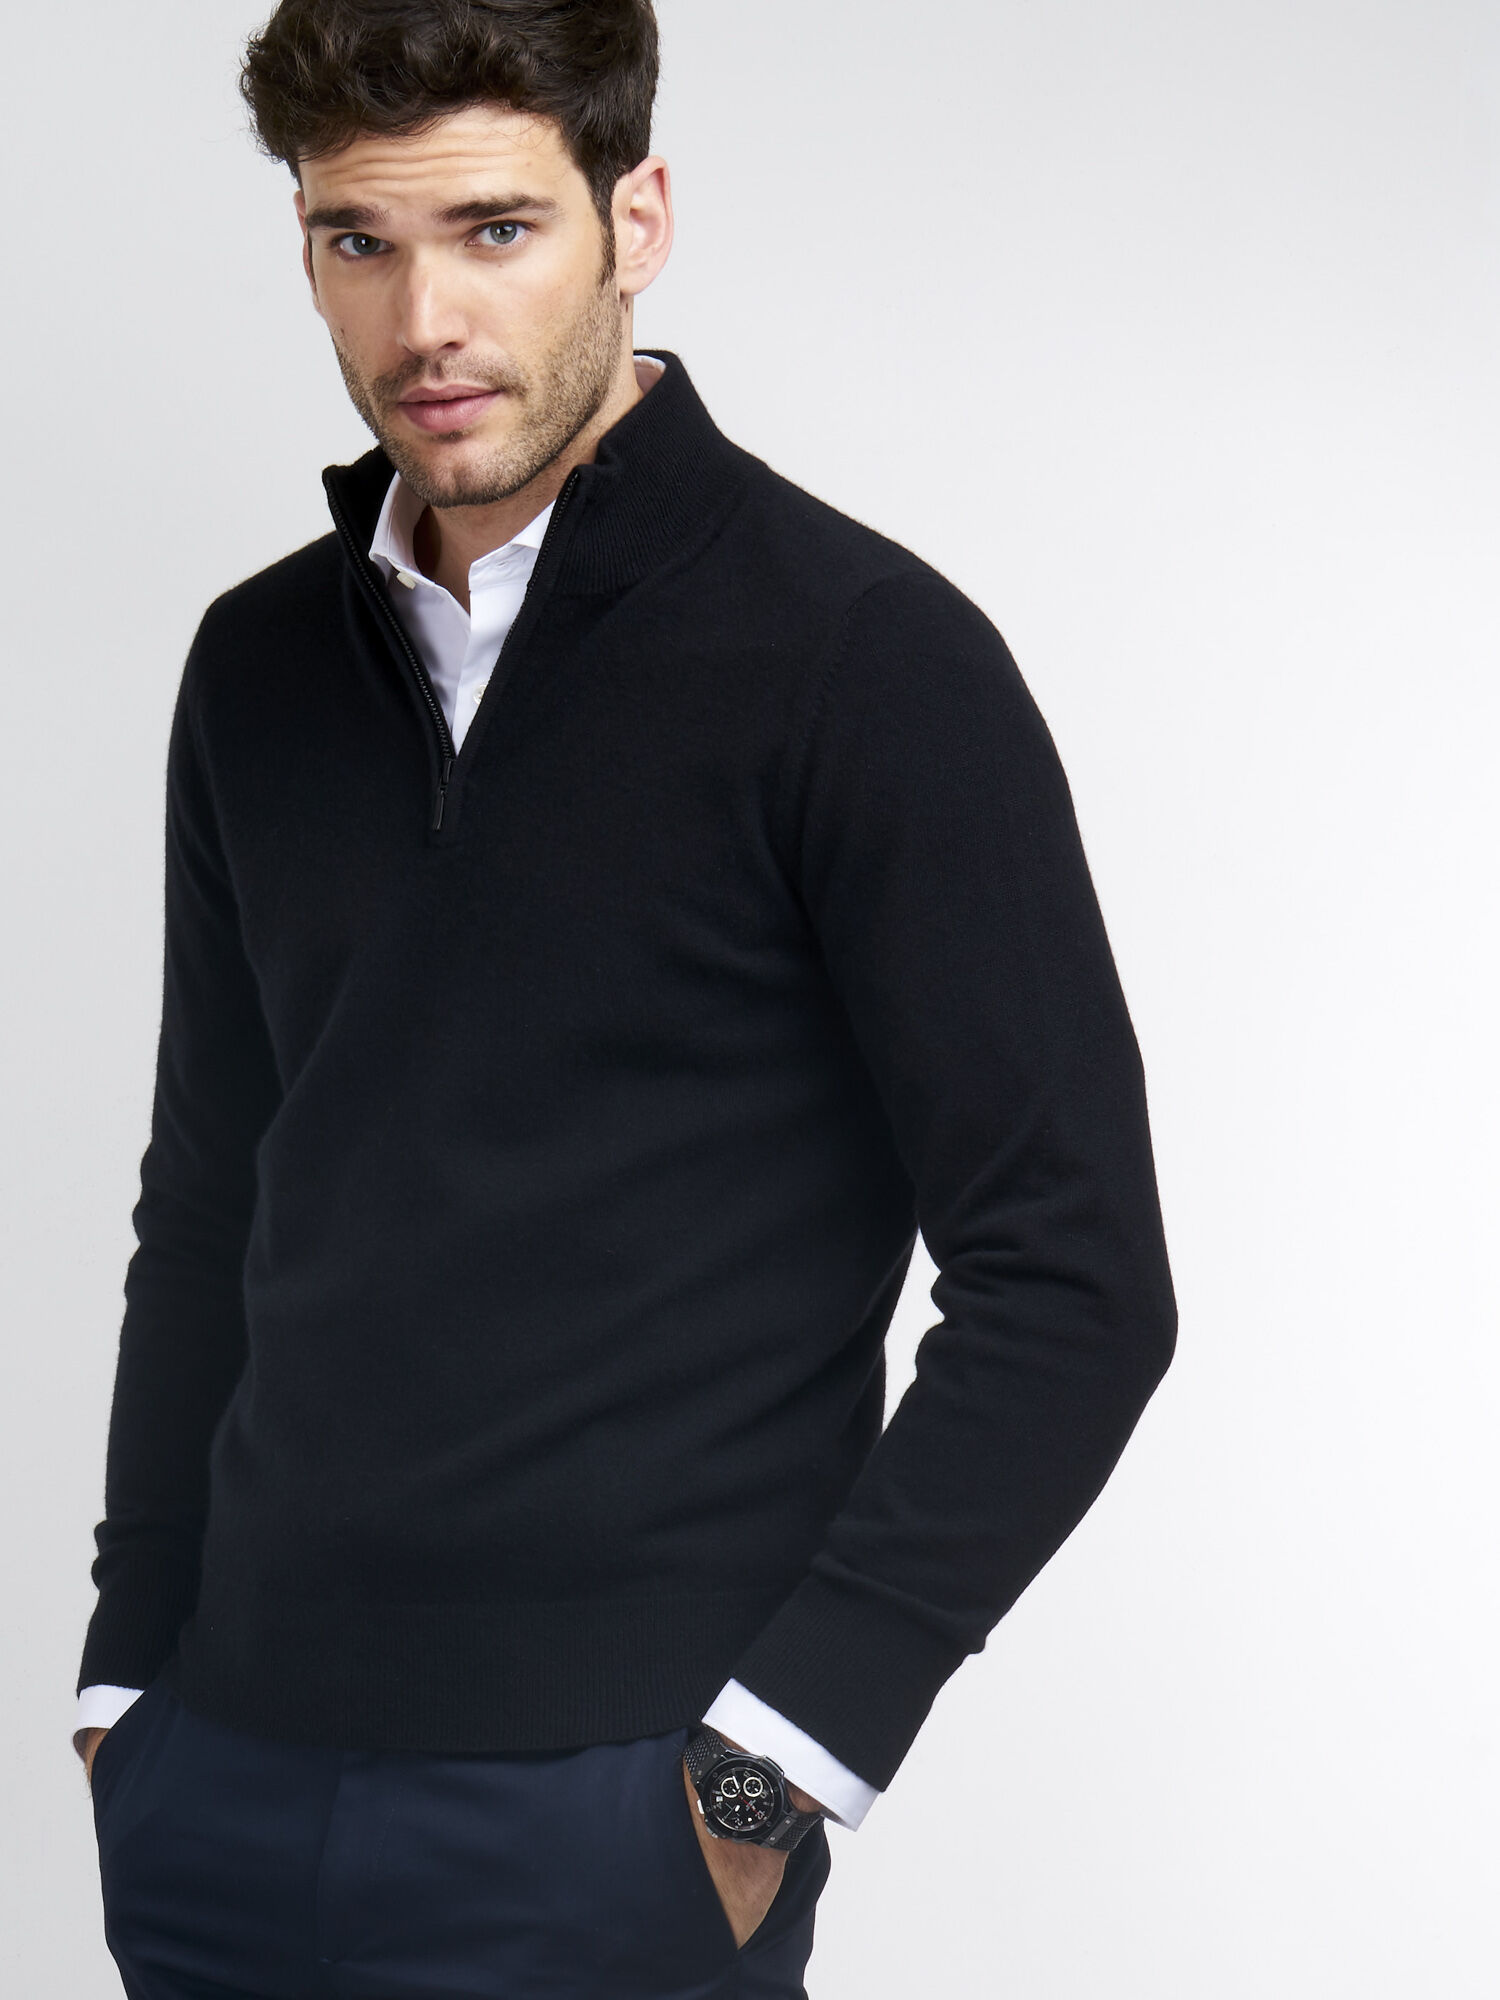 Black Cashmere Half-Zip Sweater